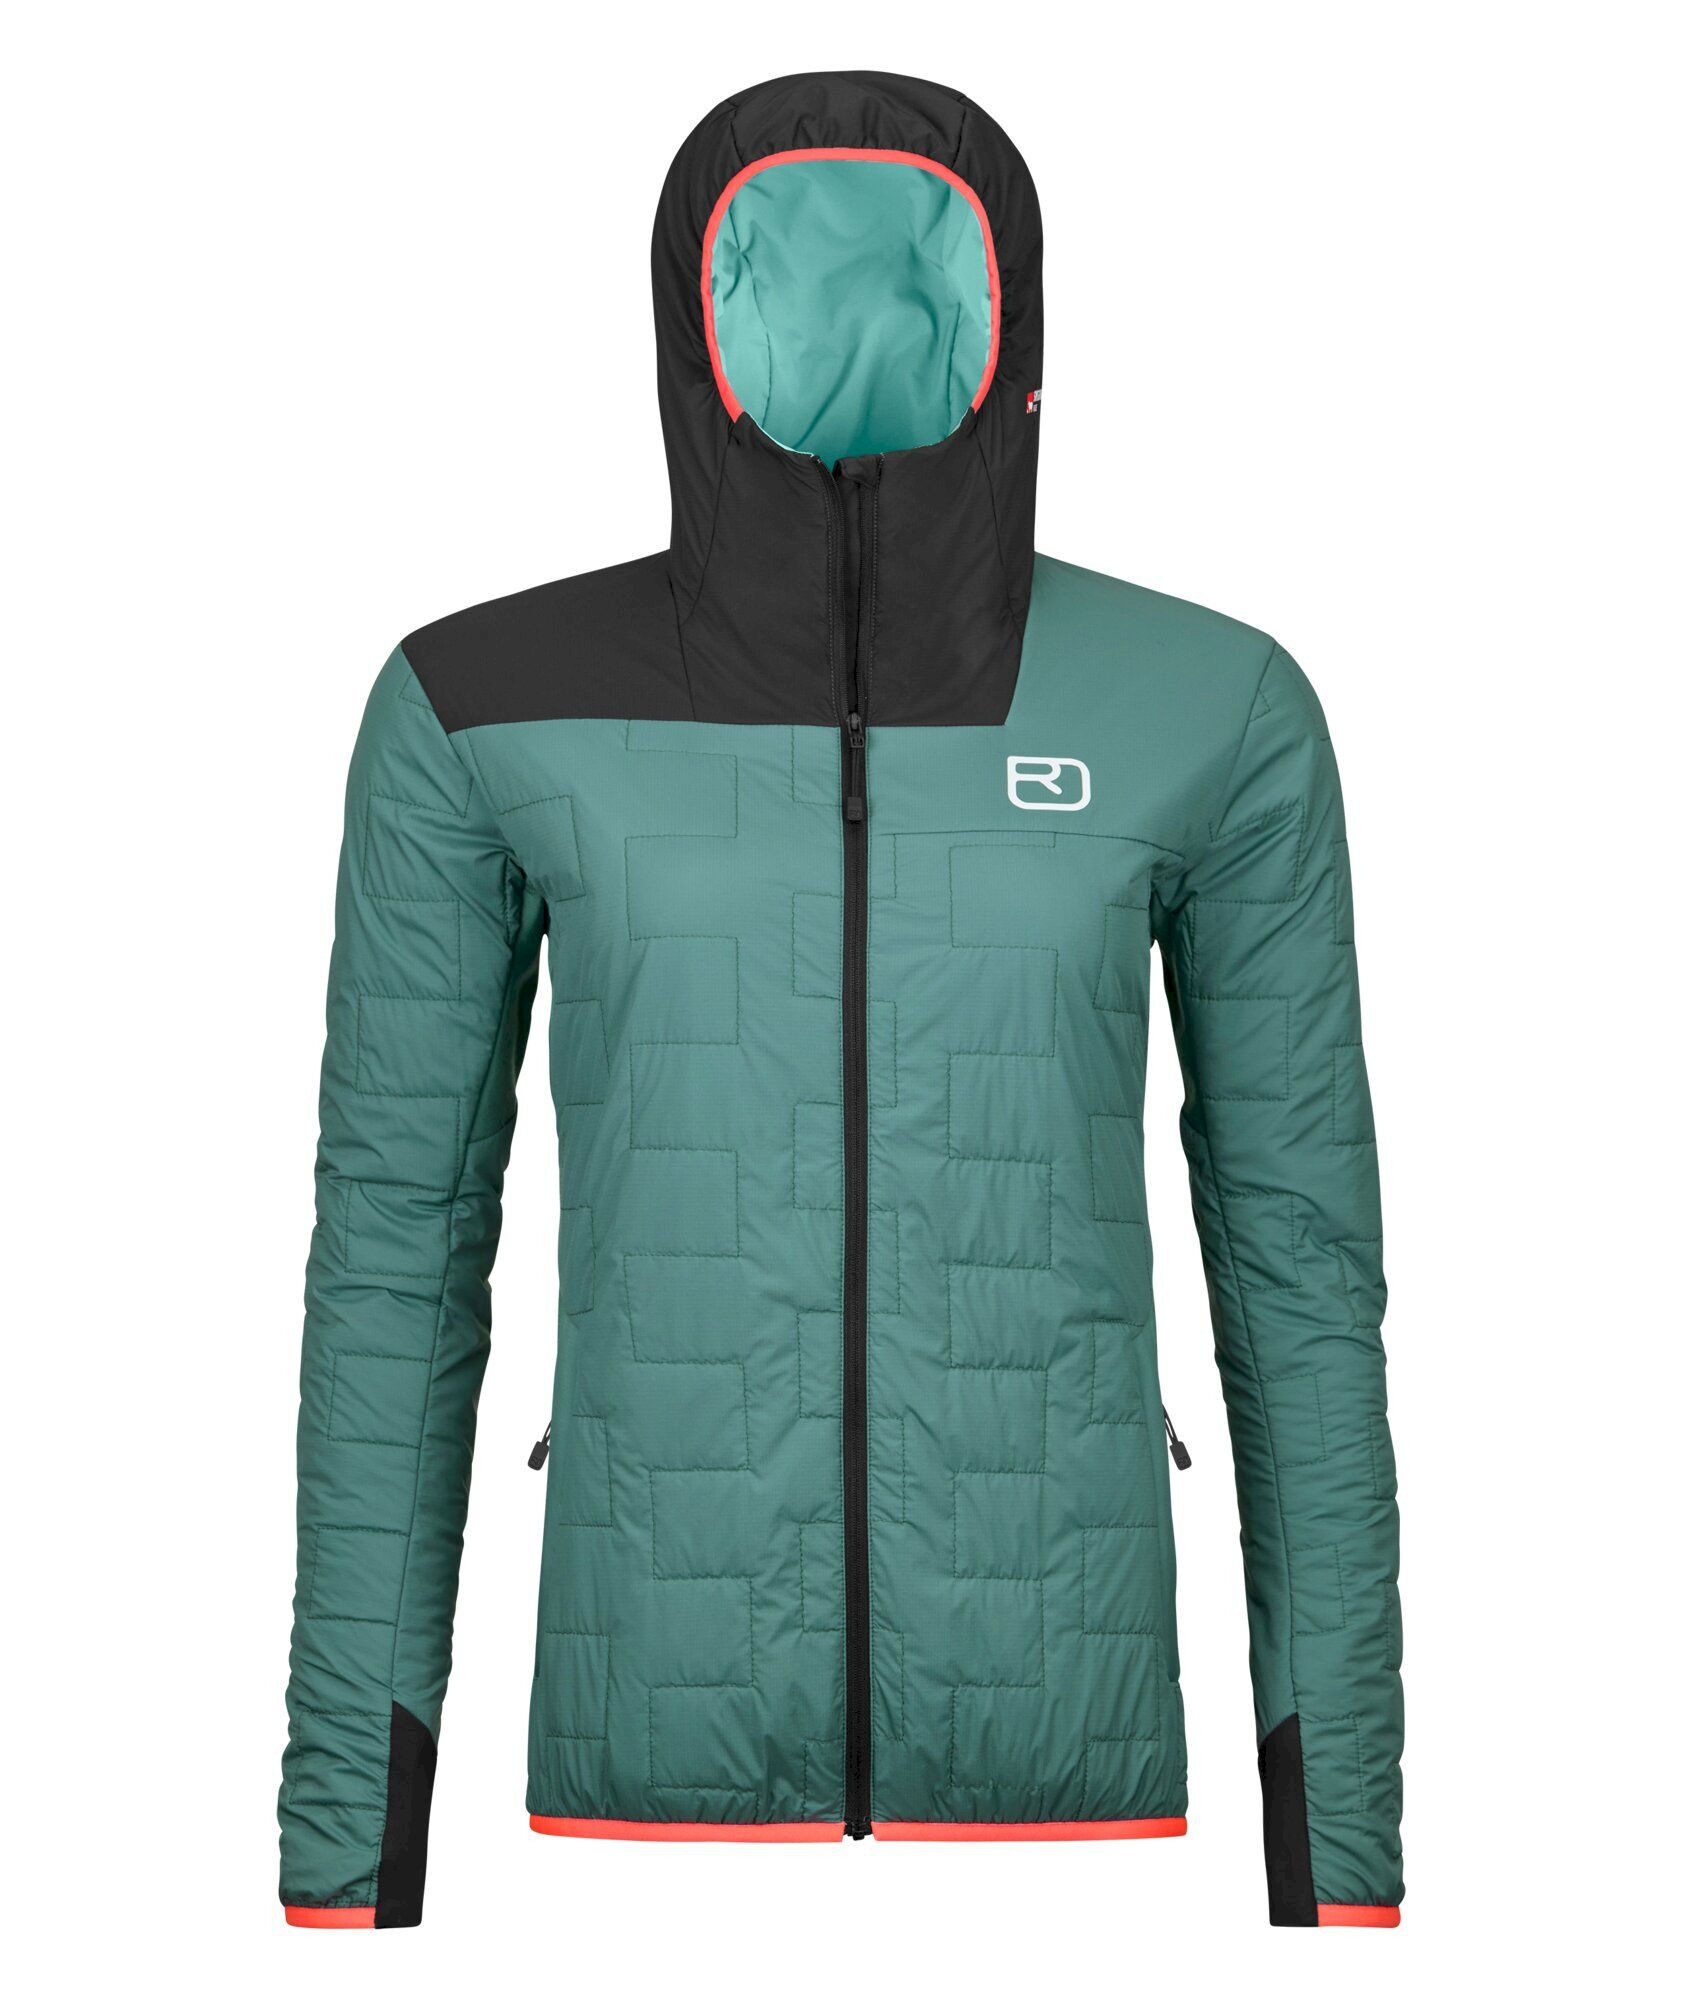 Ortovox Swisswool Piz Badus Jacket - Synthetic jacket - Women's